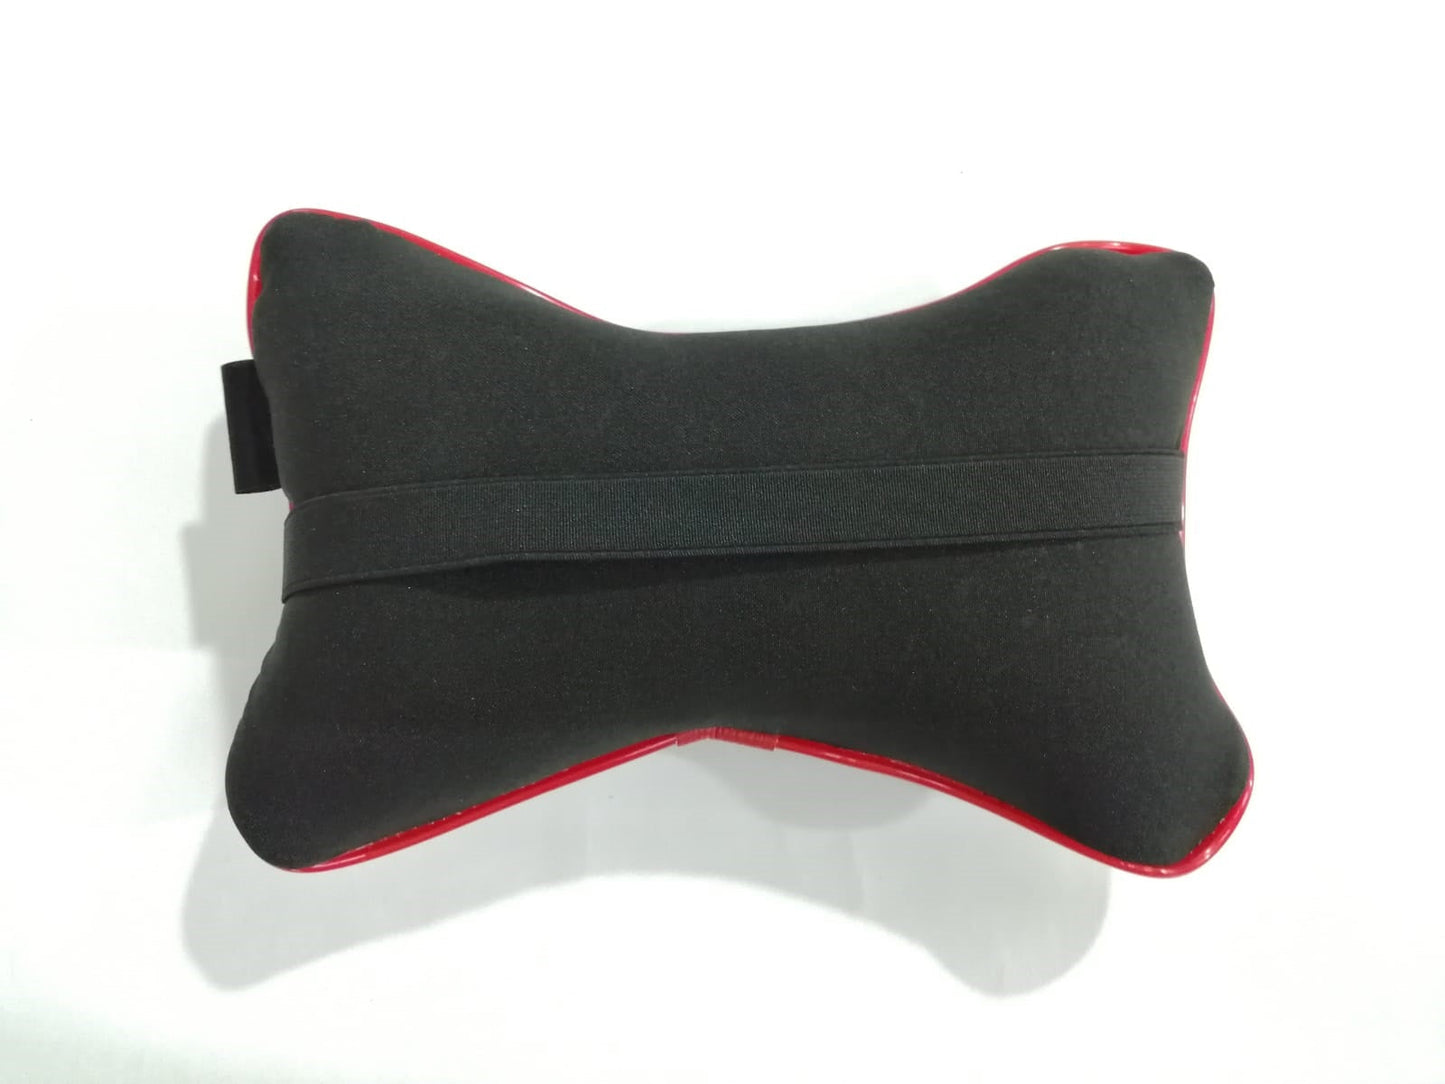 2x Mitsubishi car headrest Neck pillow Cushion